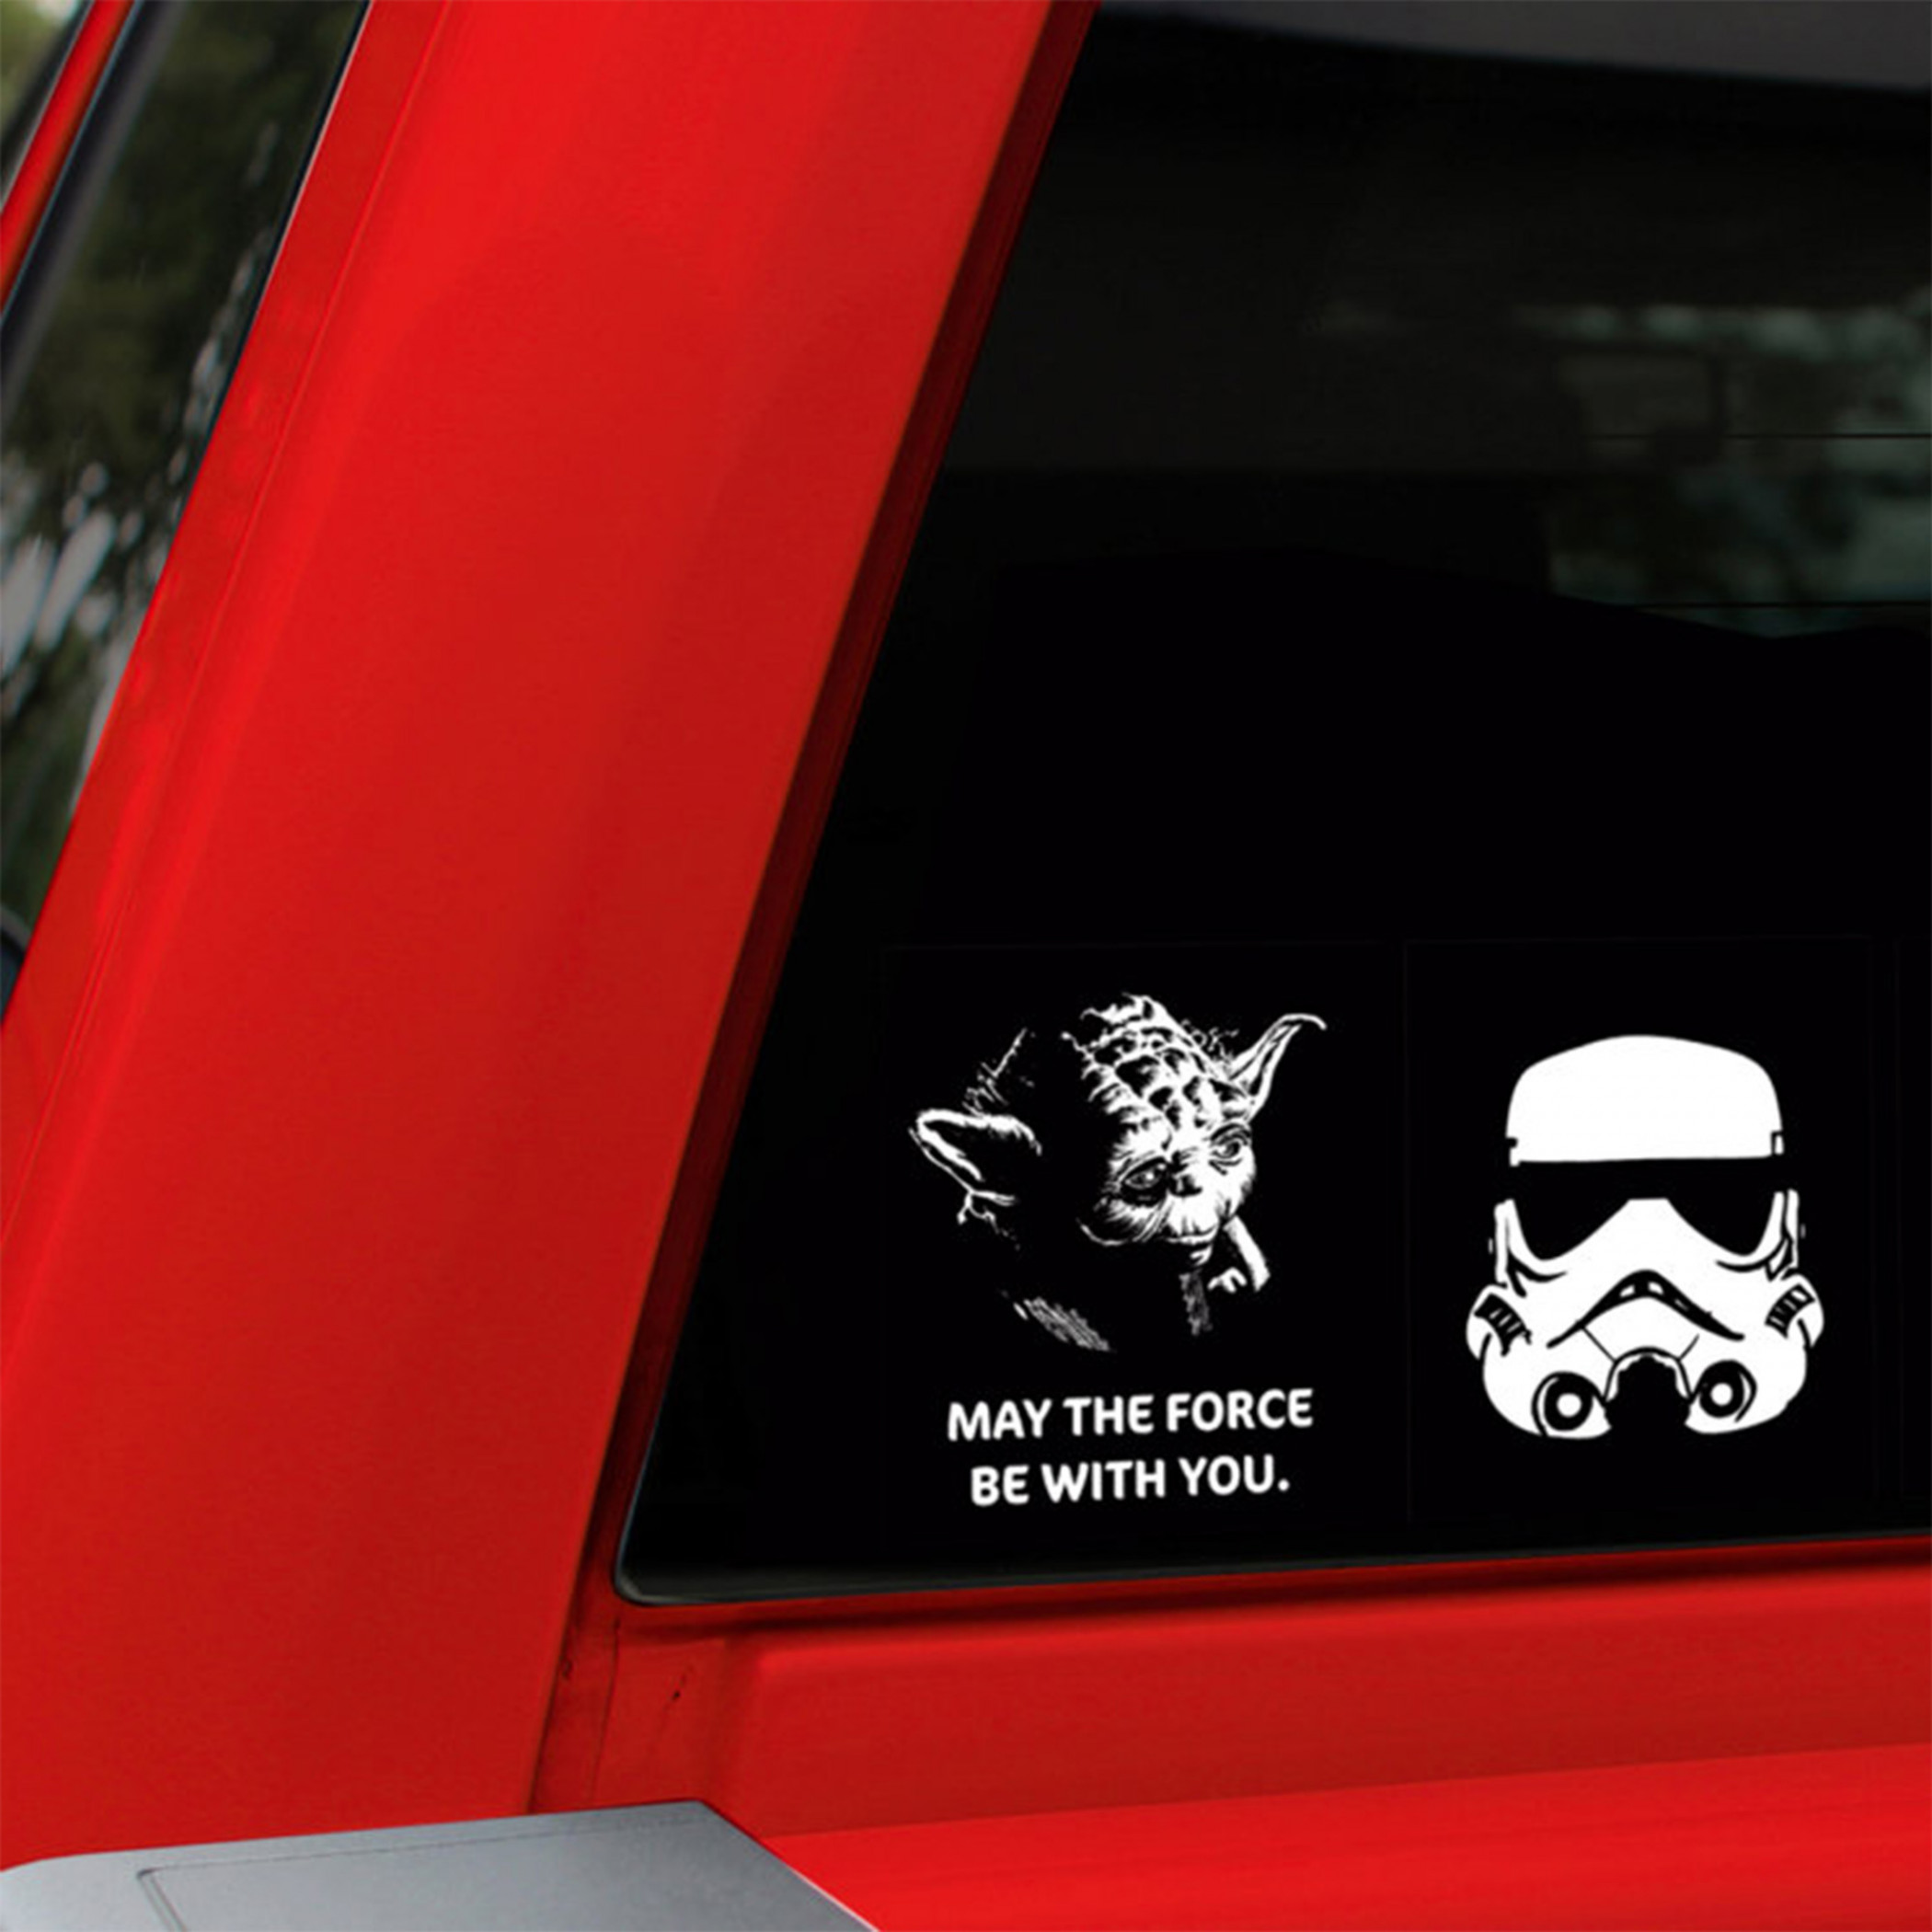 Star Wars Simple Character Icons Car Emblem Kit